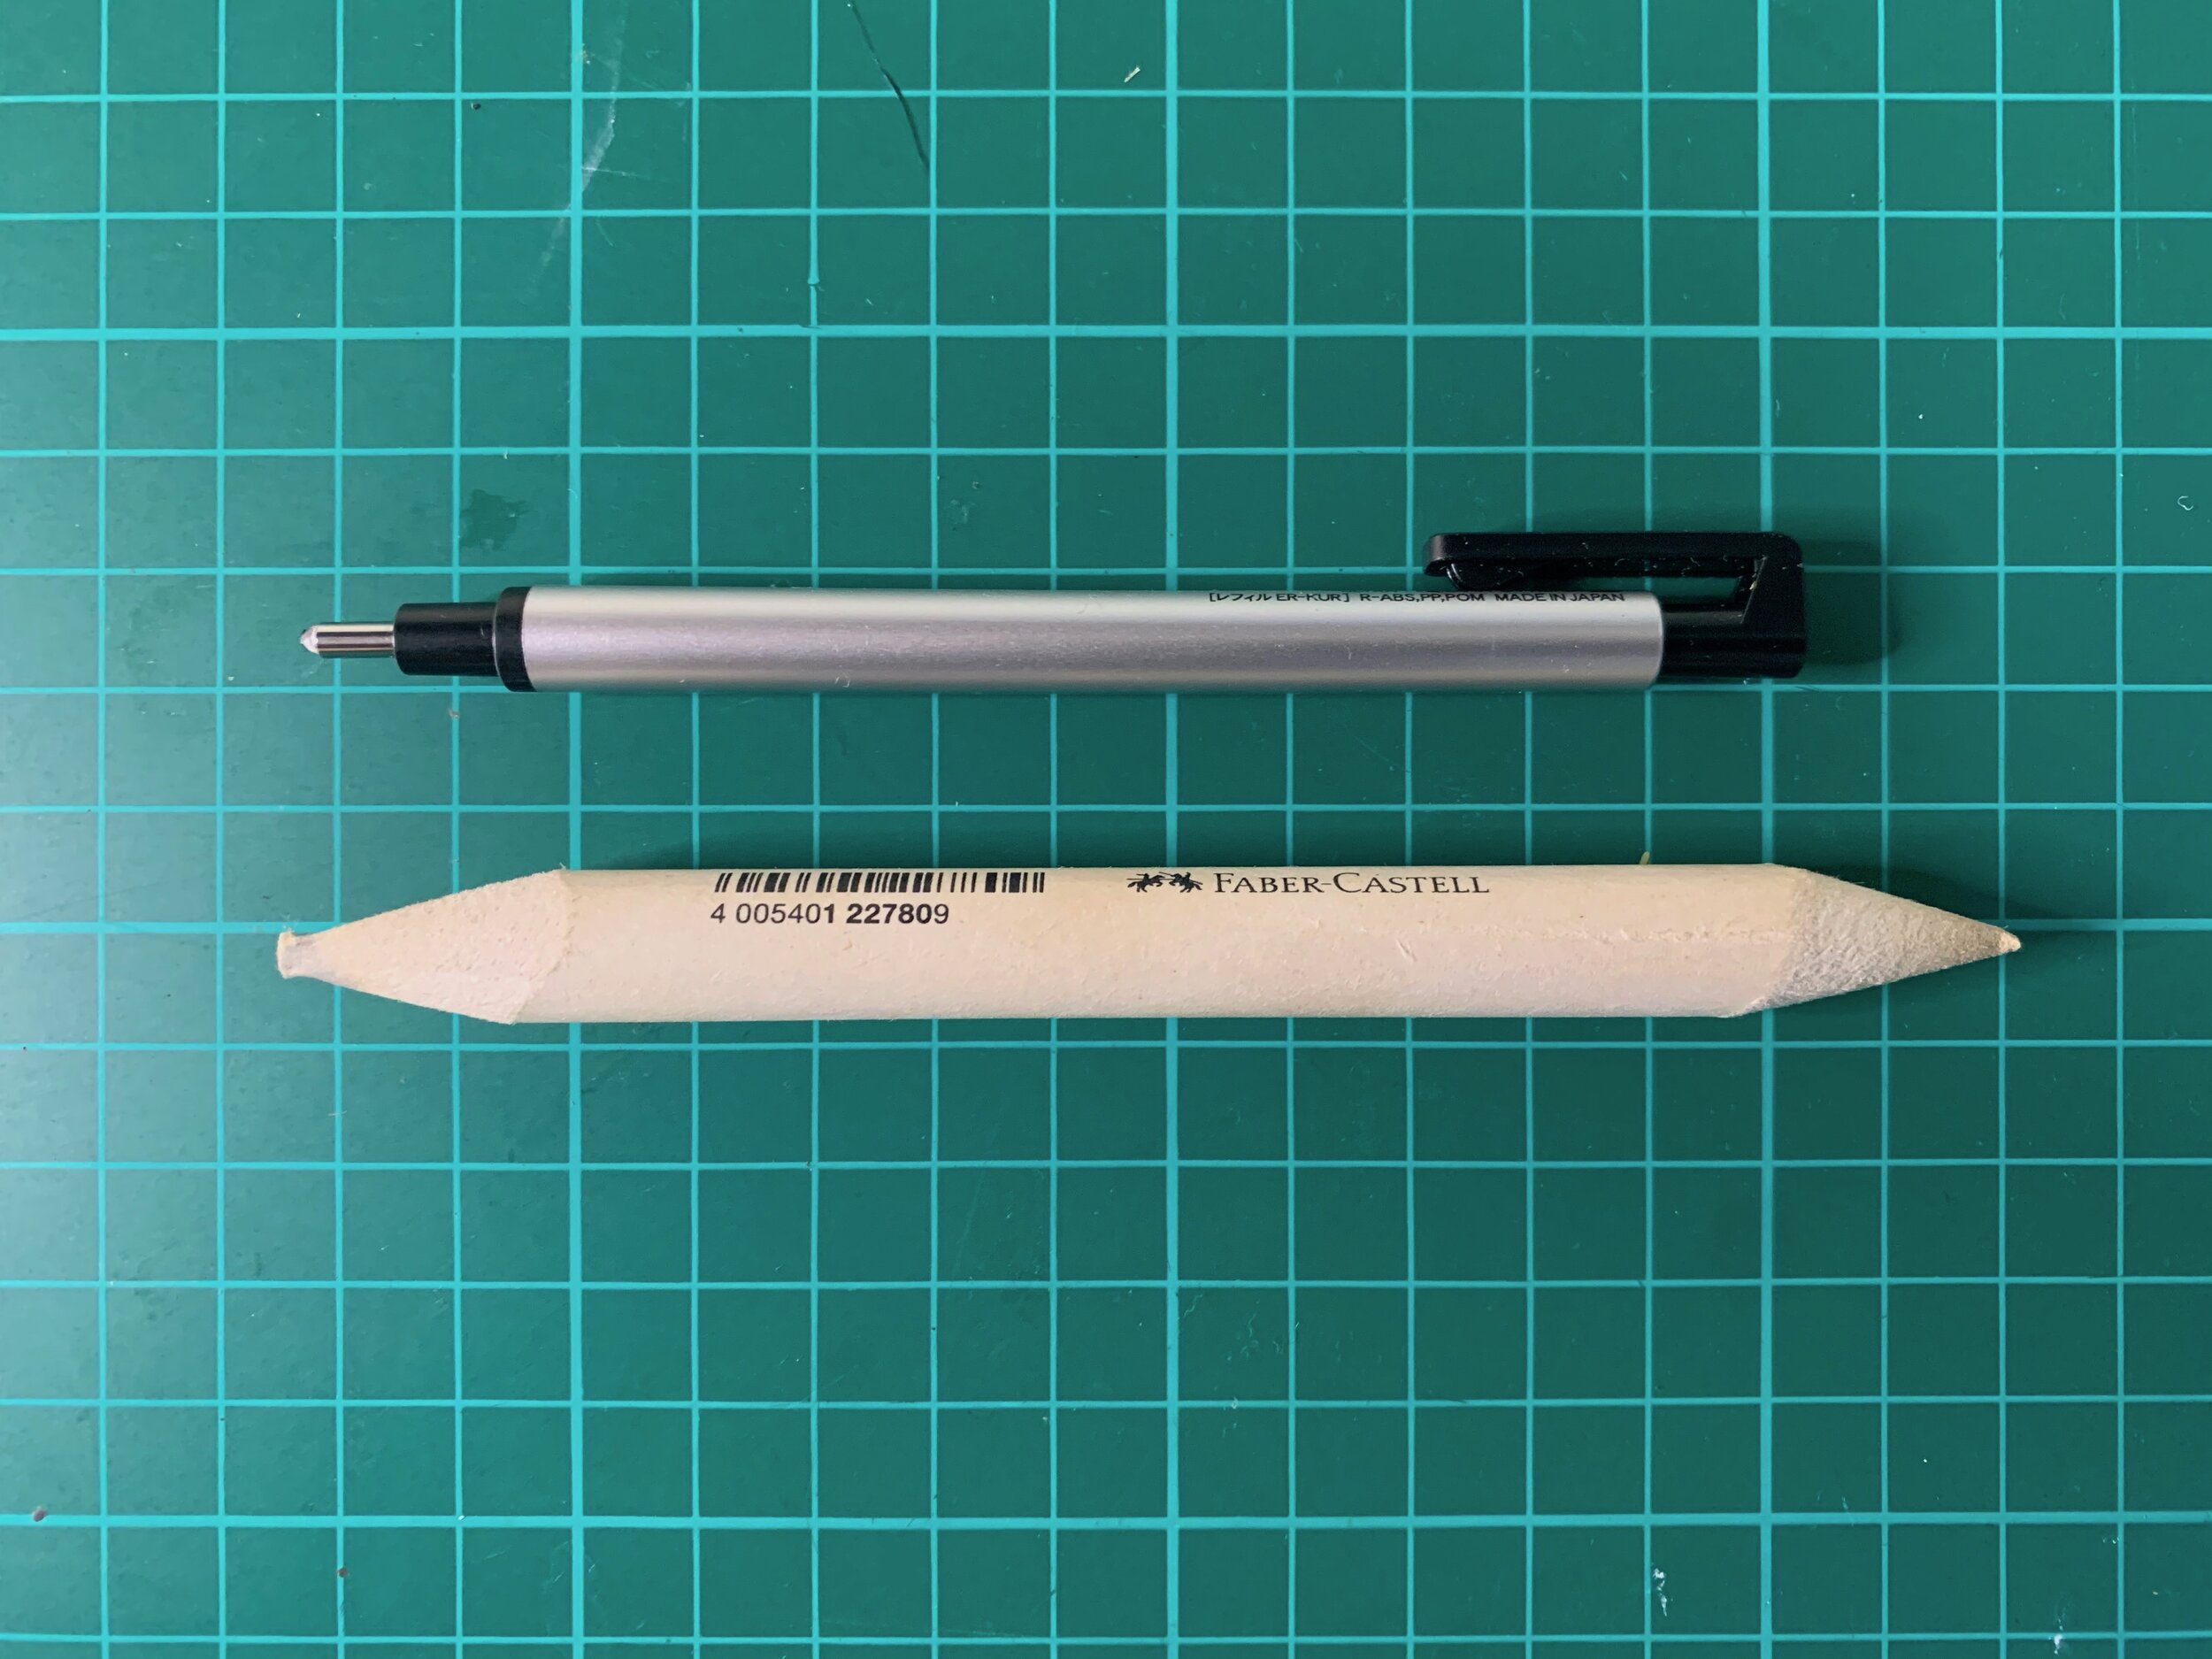 Eraser pen and paper wiper.